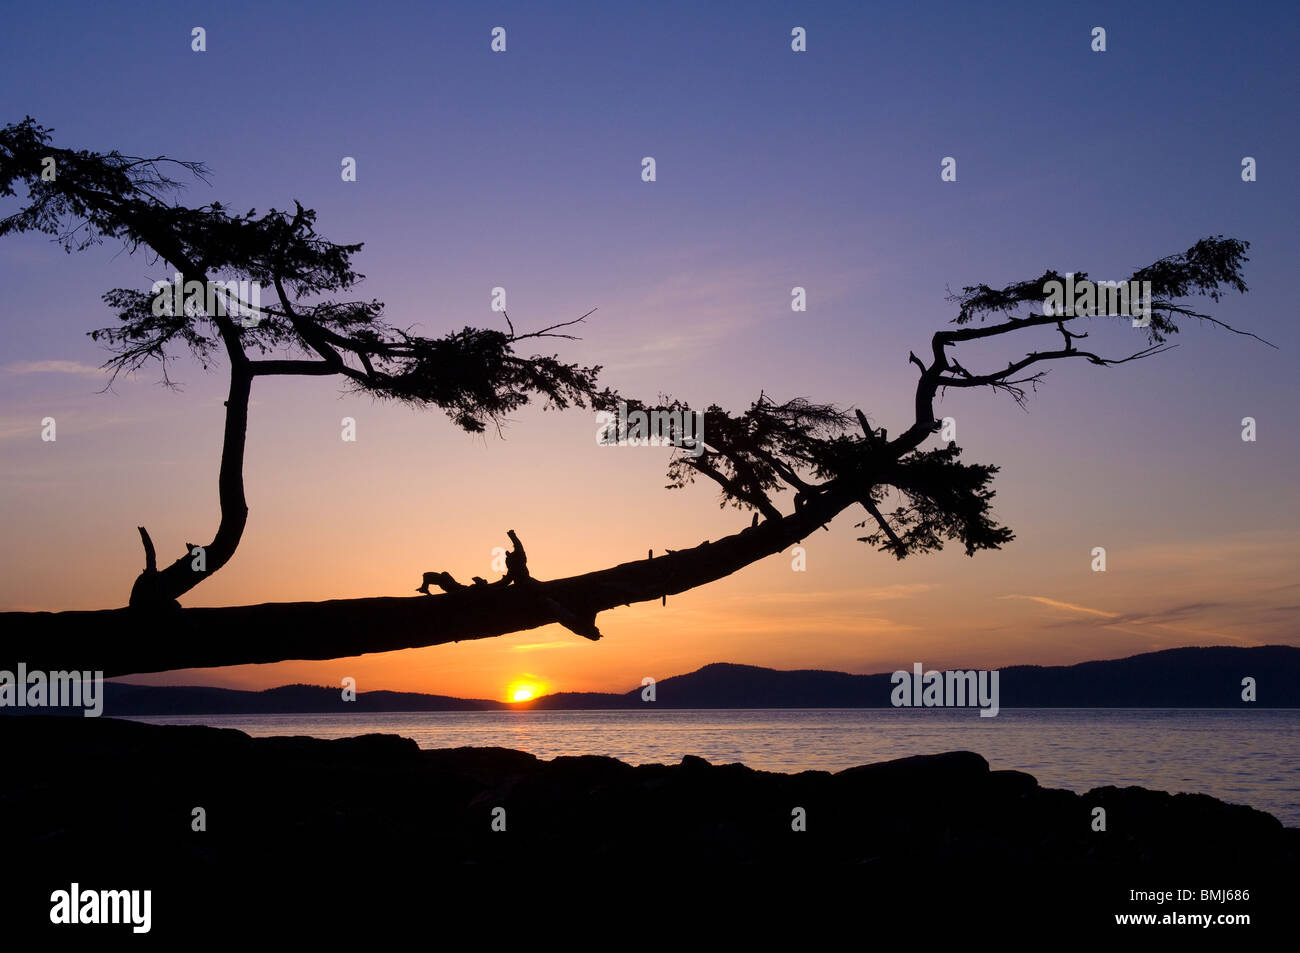 Sunset over the San Juan Islands and Rosario Strait with the leaning tree in Washington Park on Fidalgo Island, Washington. Stock Photo